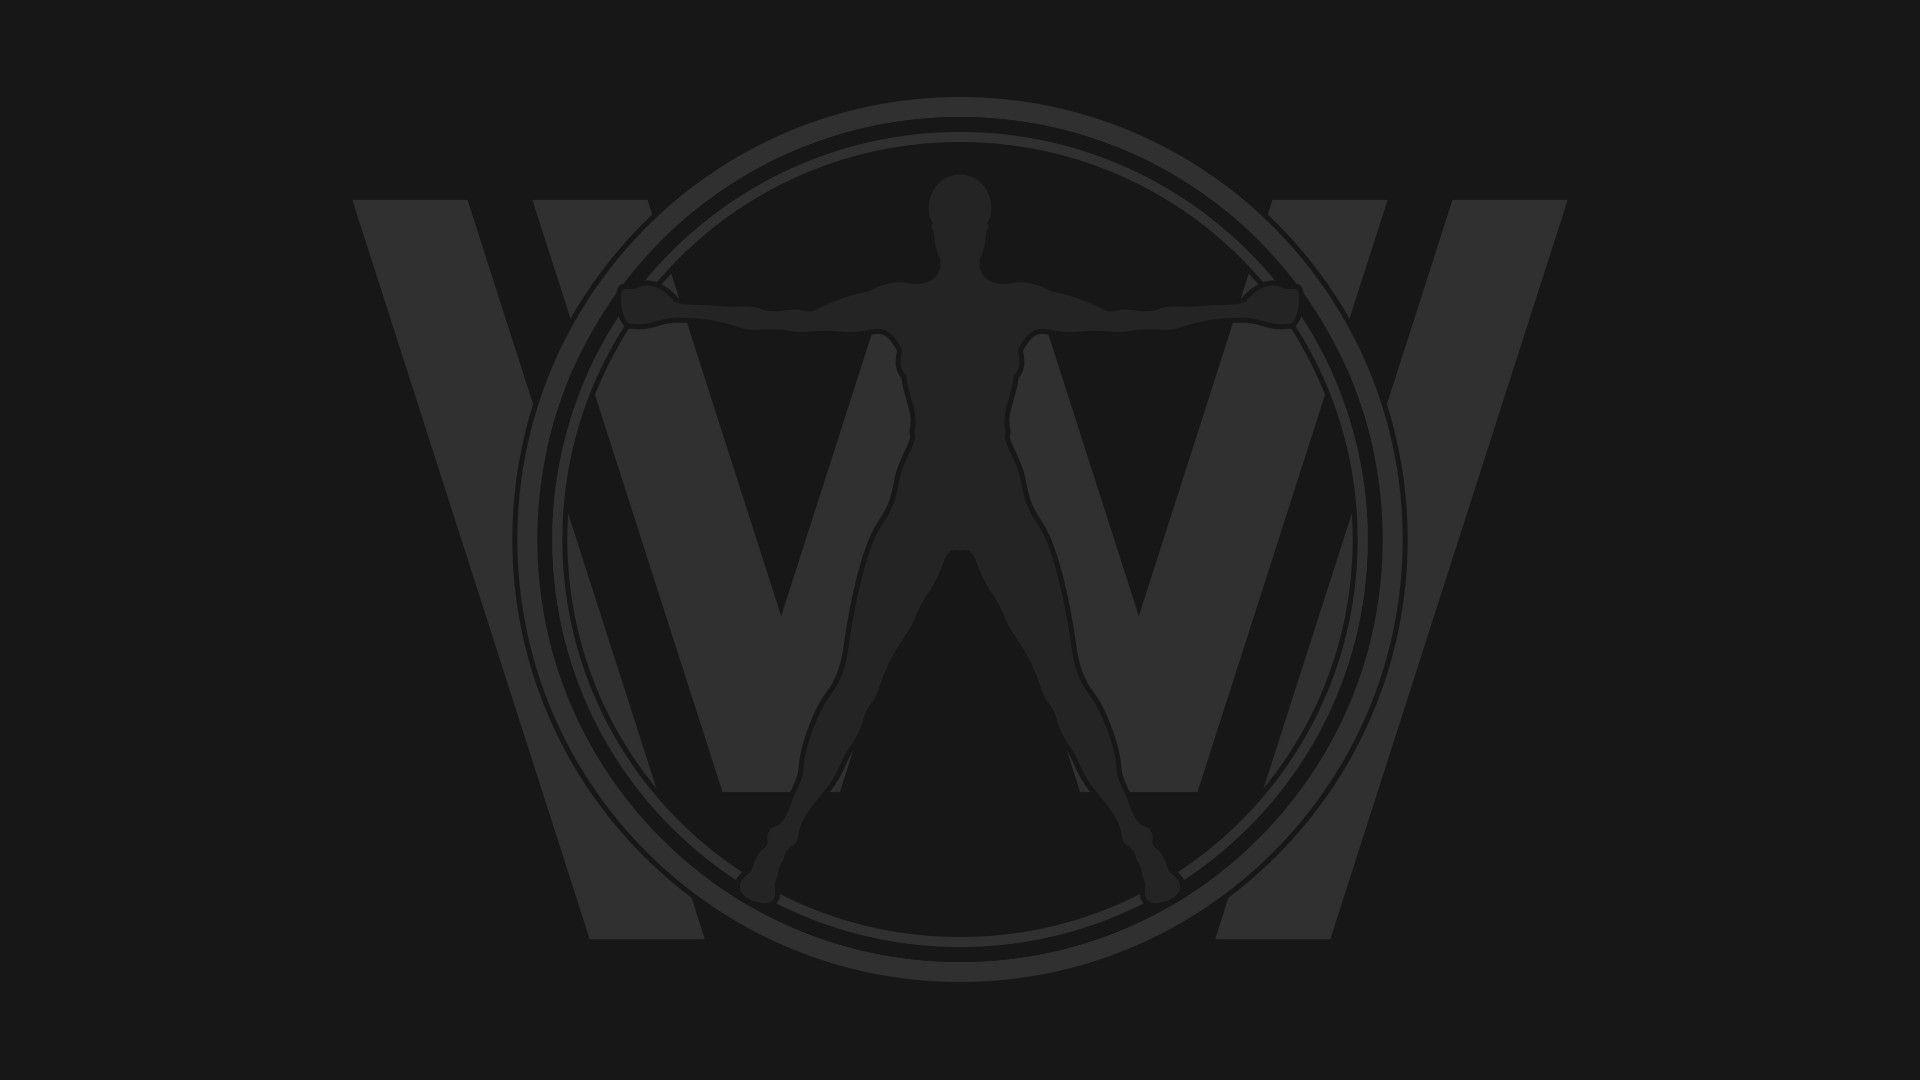 Westworld wallpaper.com Wallpaper World